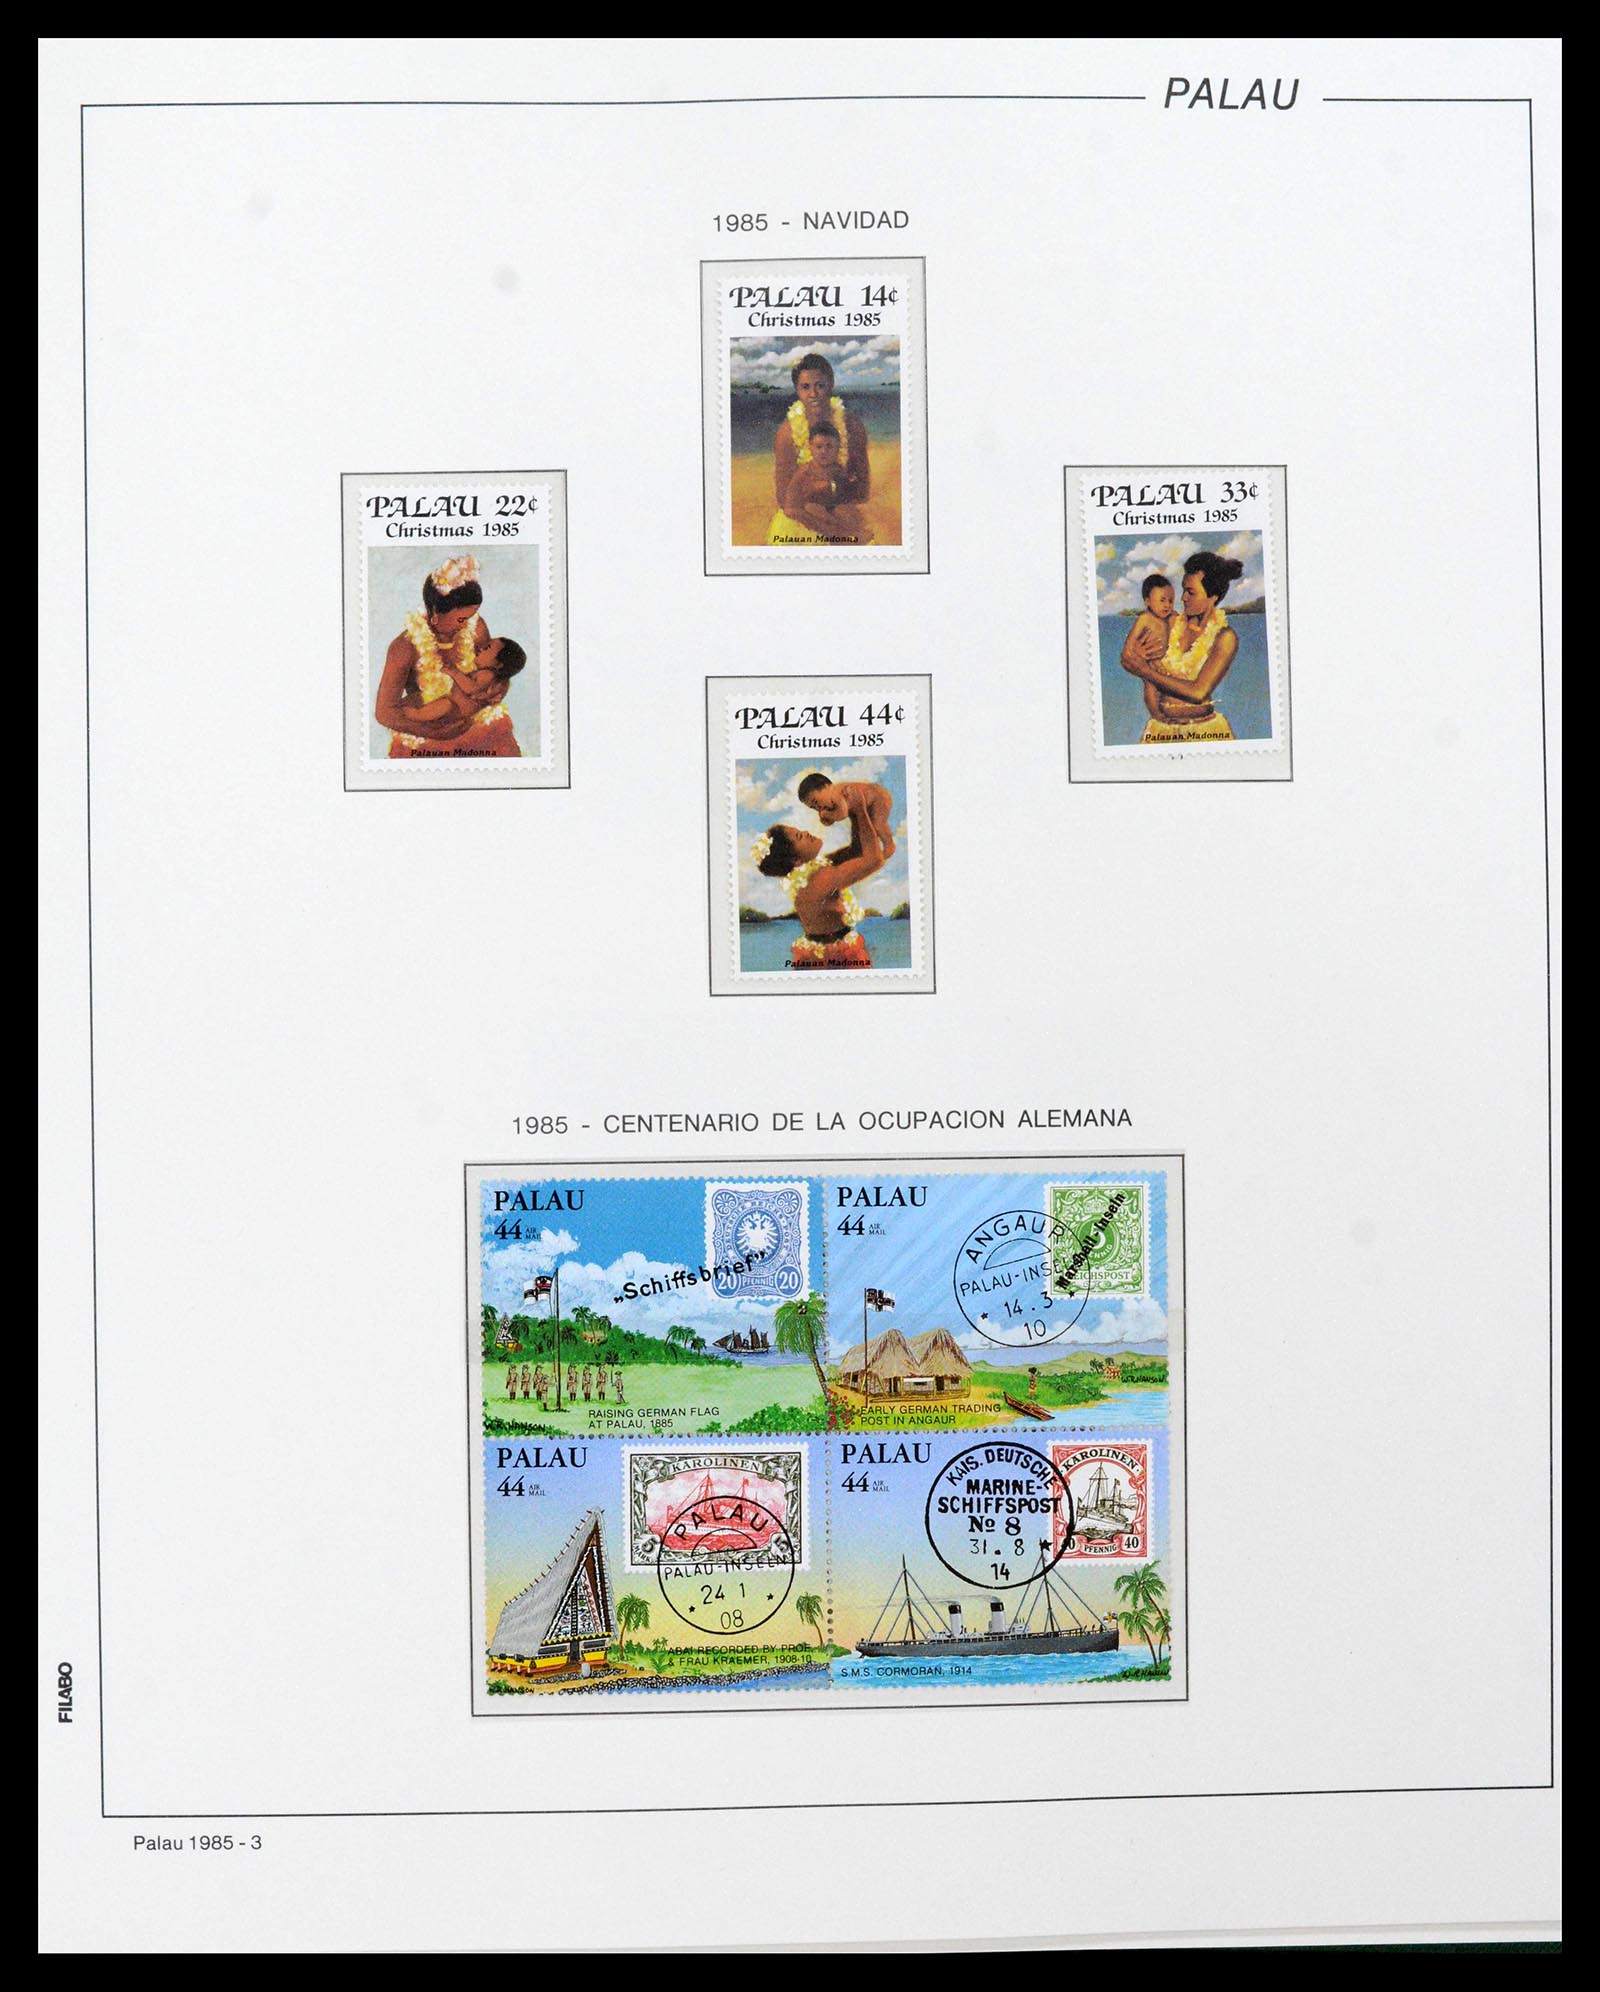 39222 0008 - Stamp collection 39222 Palau, Micronesia and Marshall islands 1980-1995.